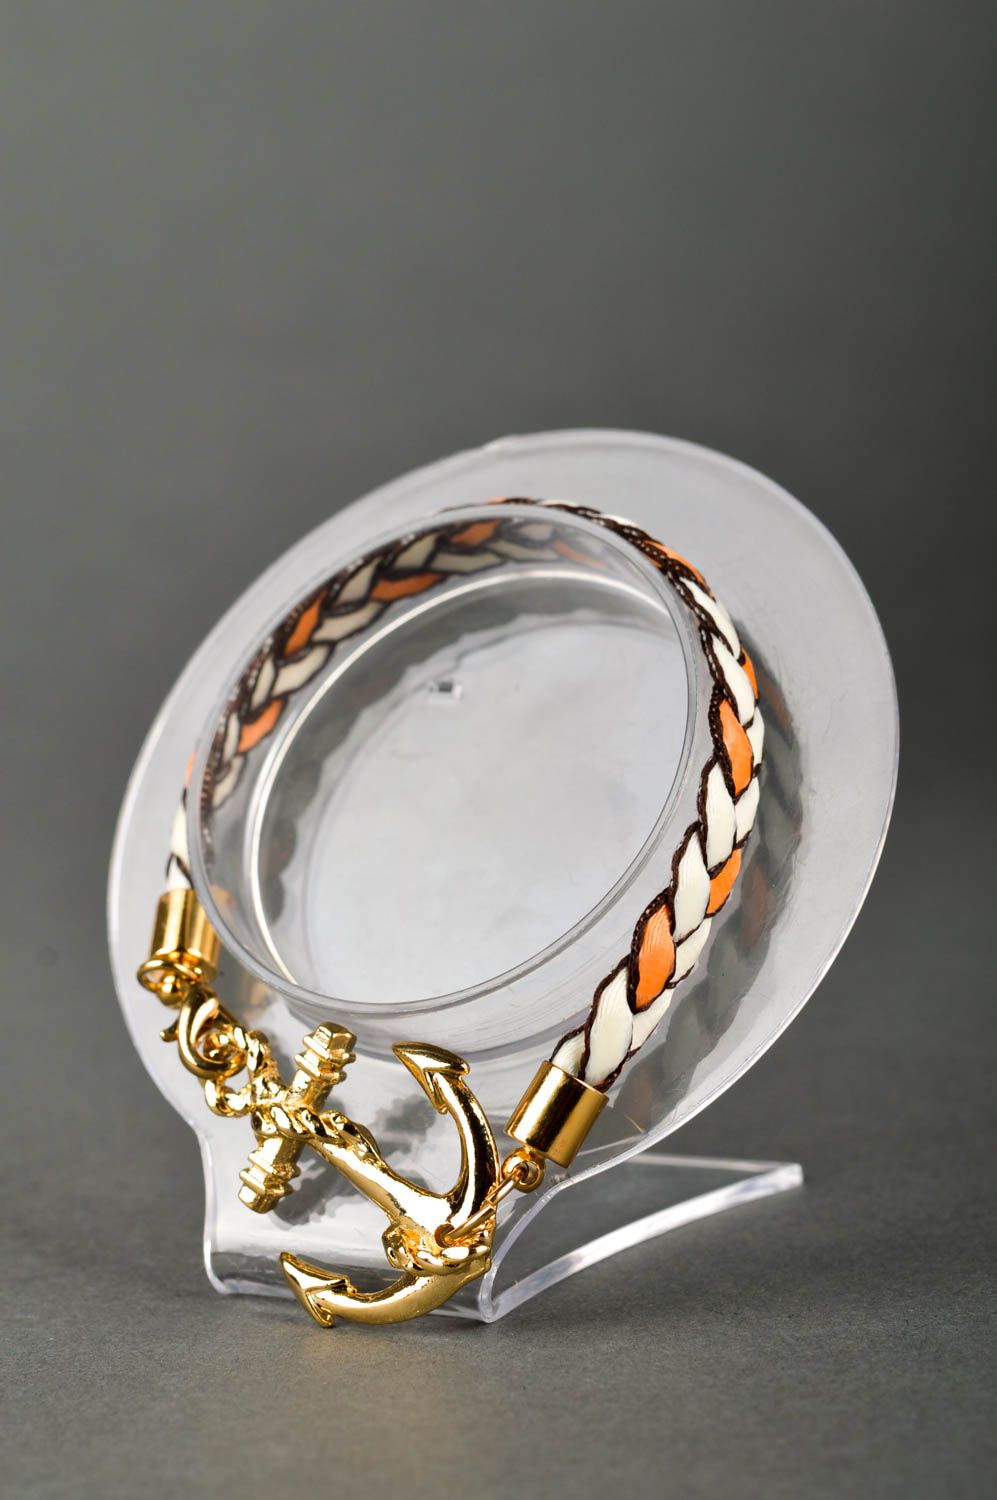 Handmade bracelet wrist bracelet designer accessories fashion jewelry cool gifts photo 1